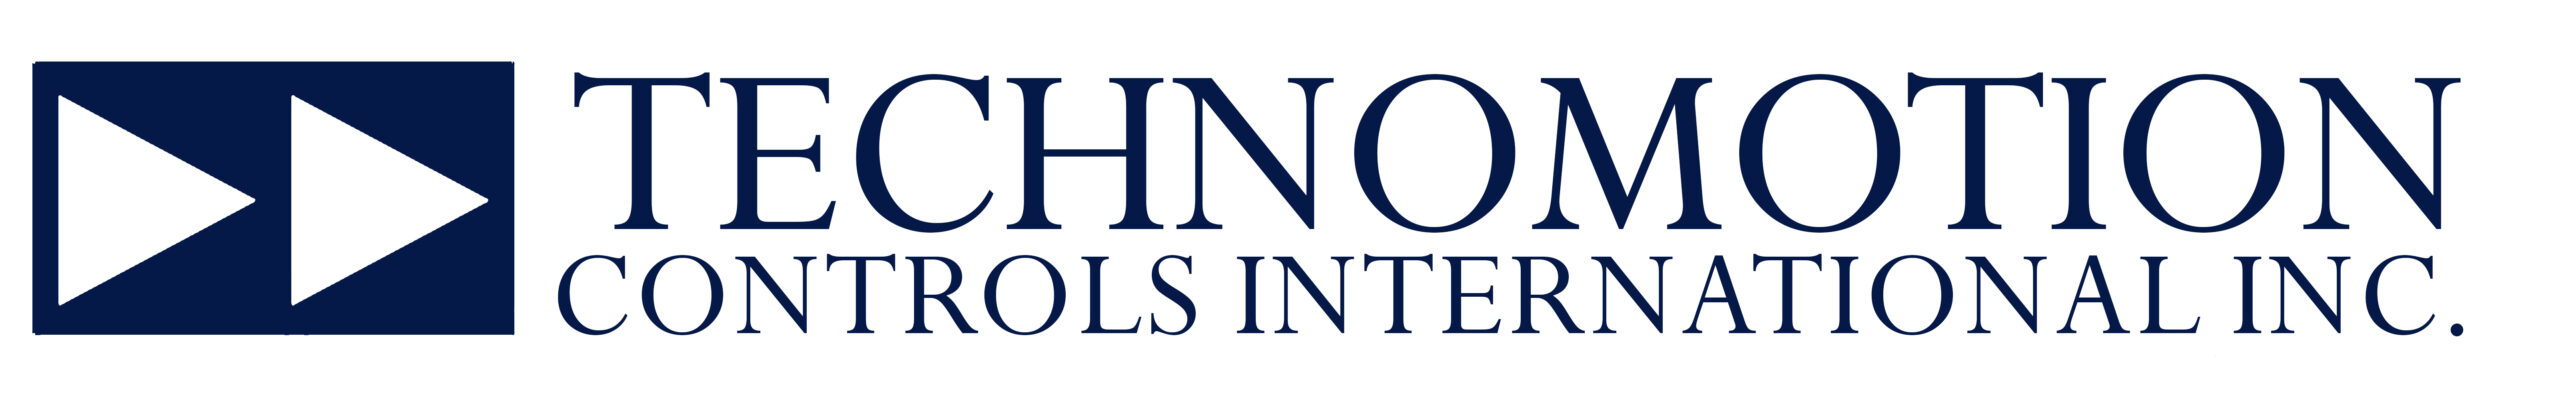 Technomotion Controls International Inc.